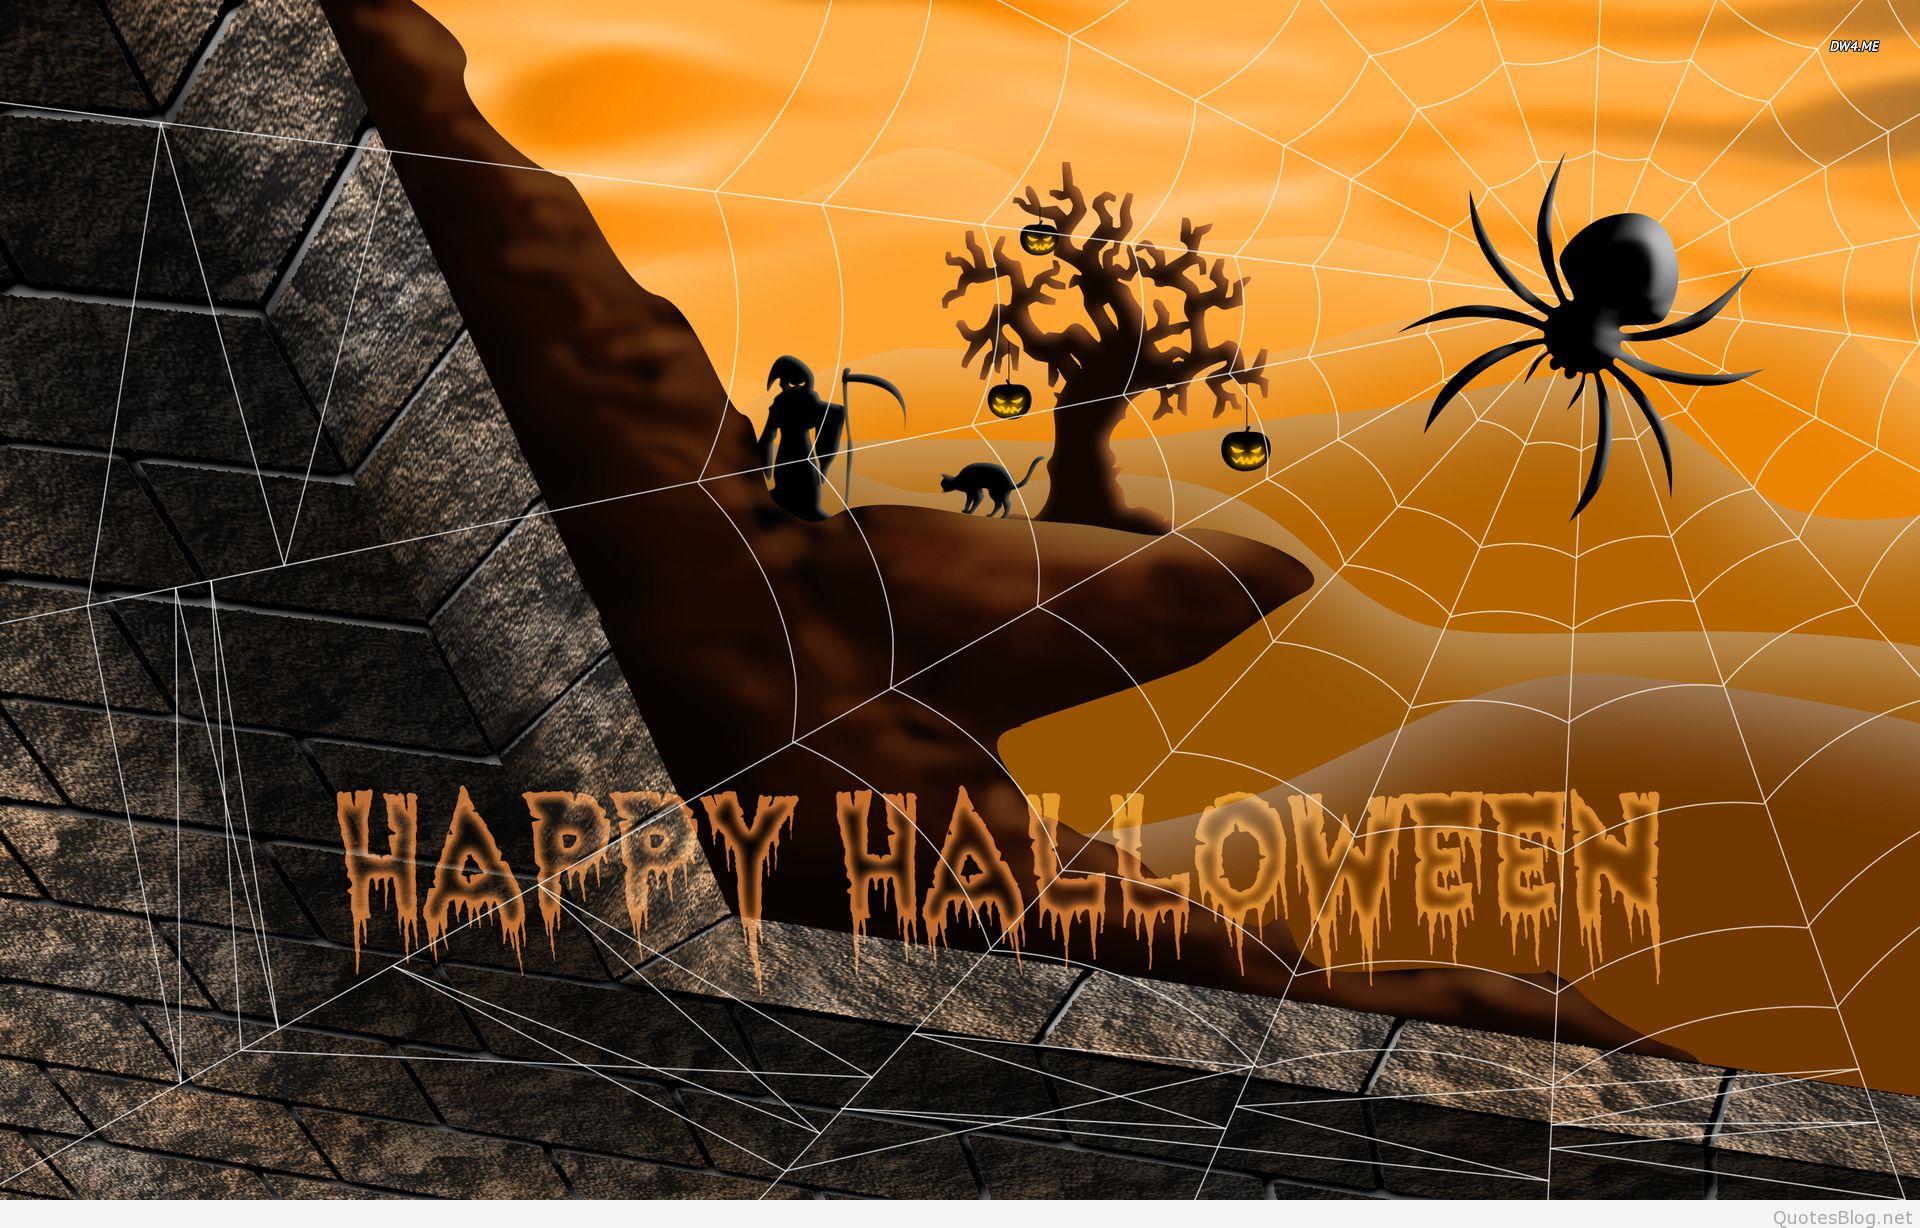 Happy Halloween Wallpaper. Halloween Image and Background